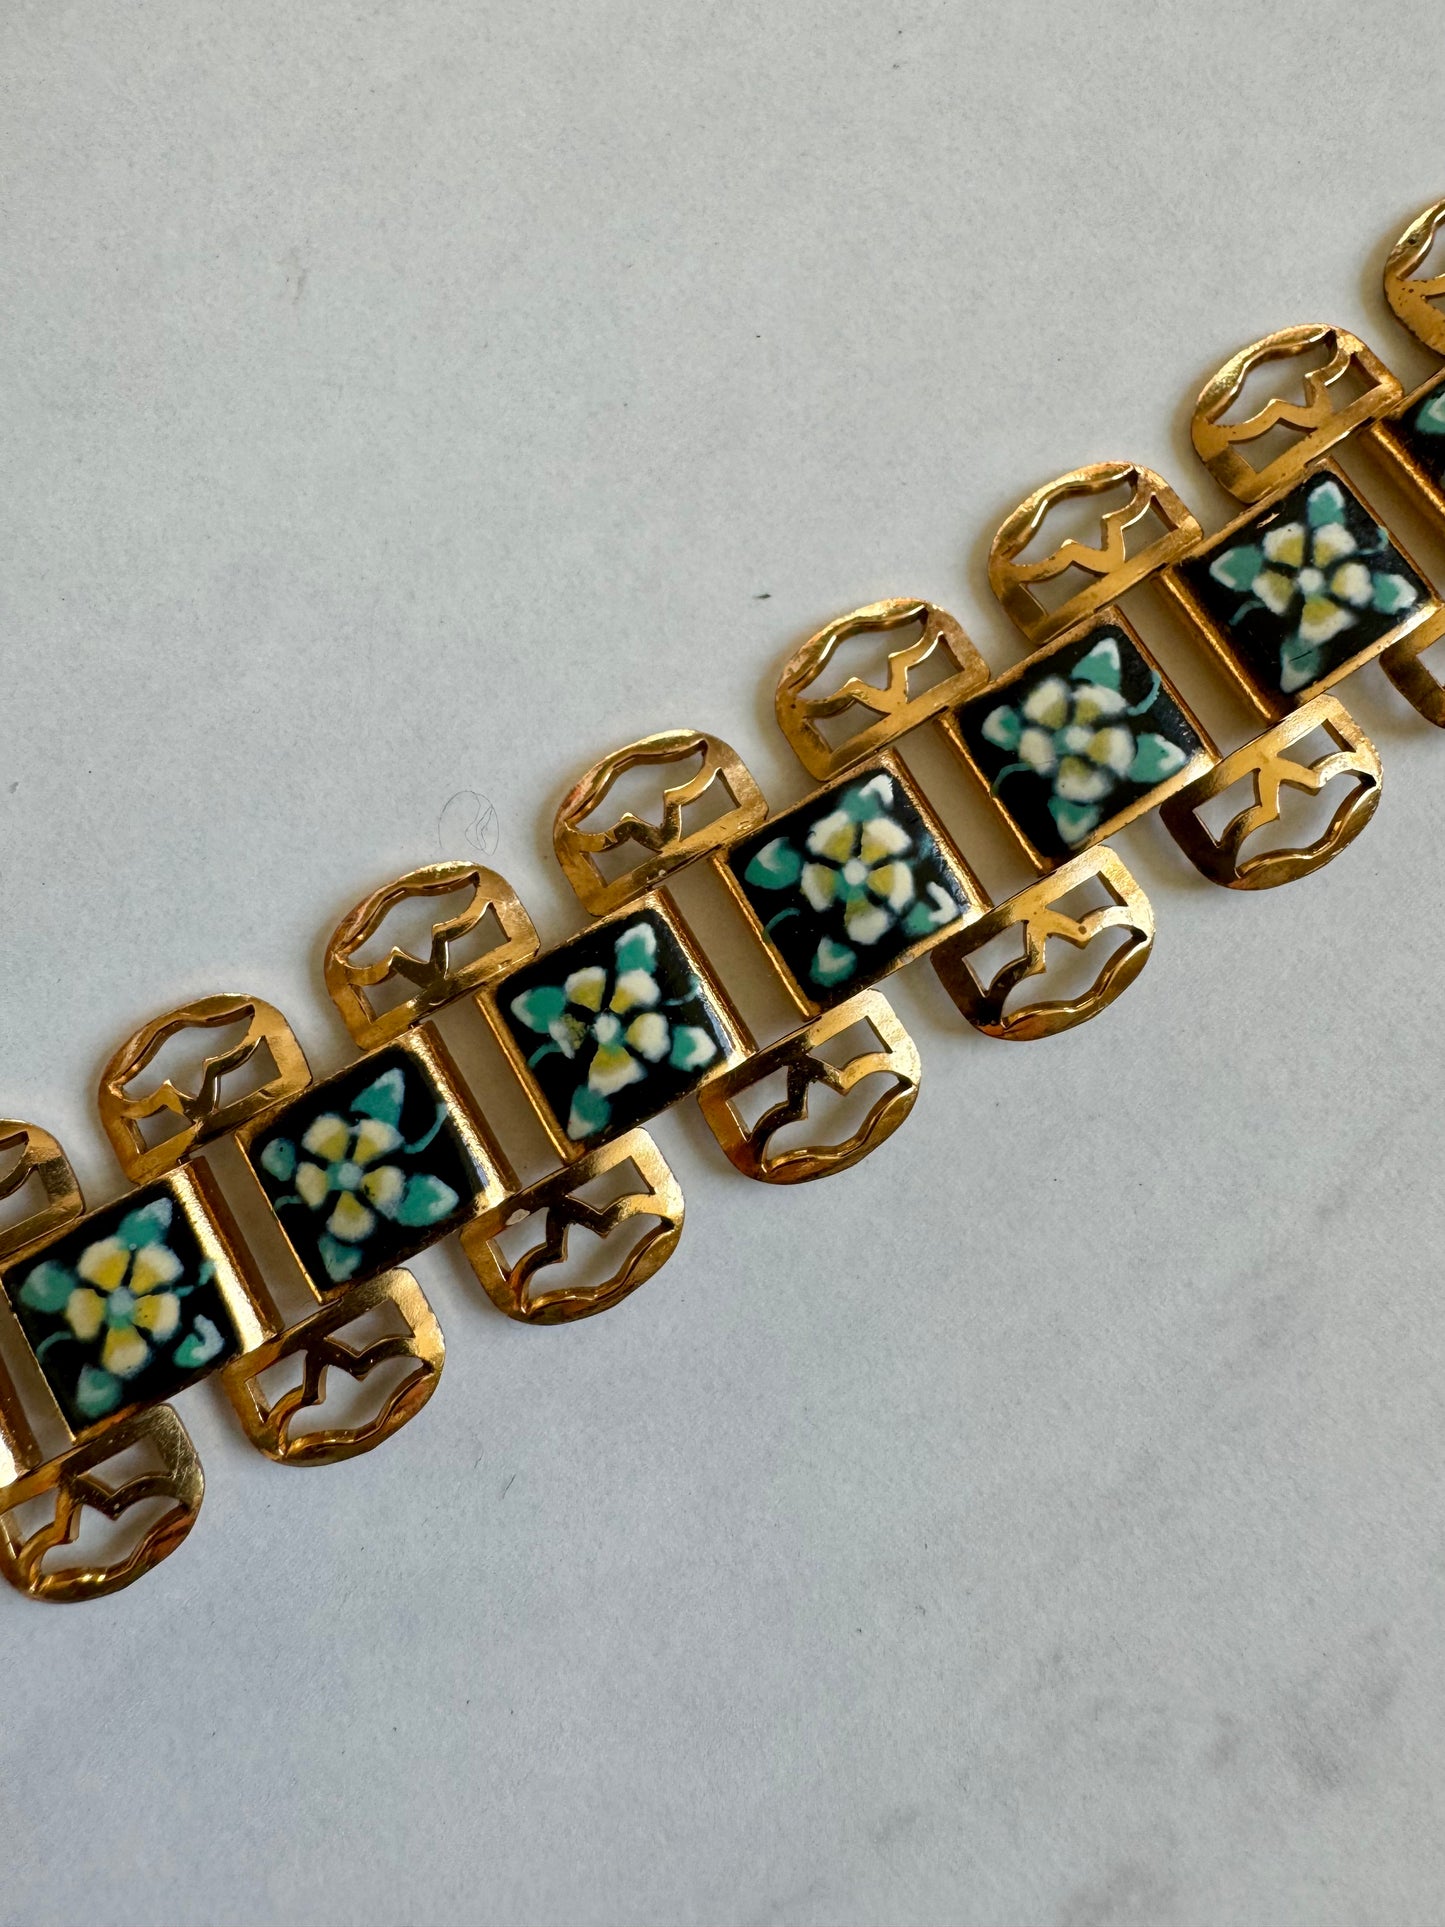 Gorgeous vintage gold tone and enamel flower bracelet